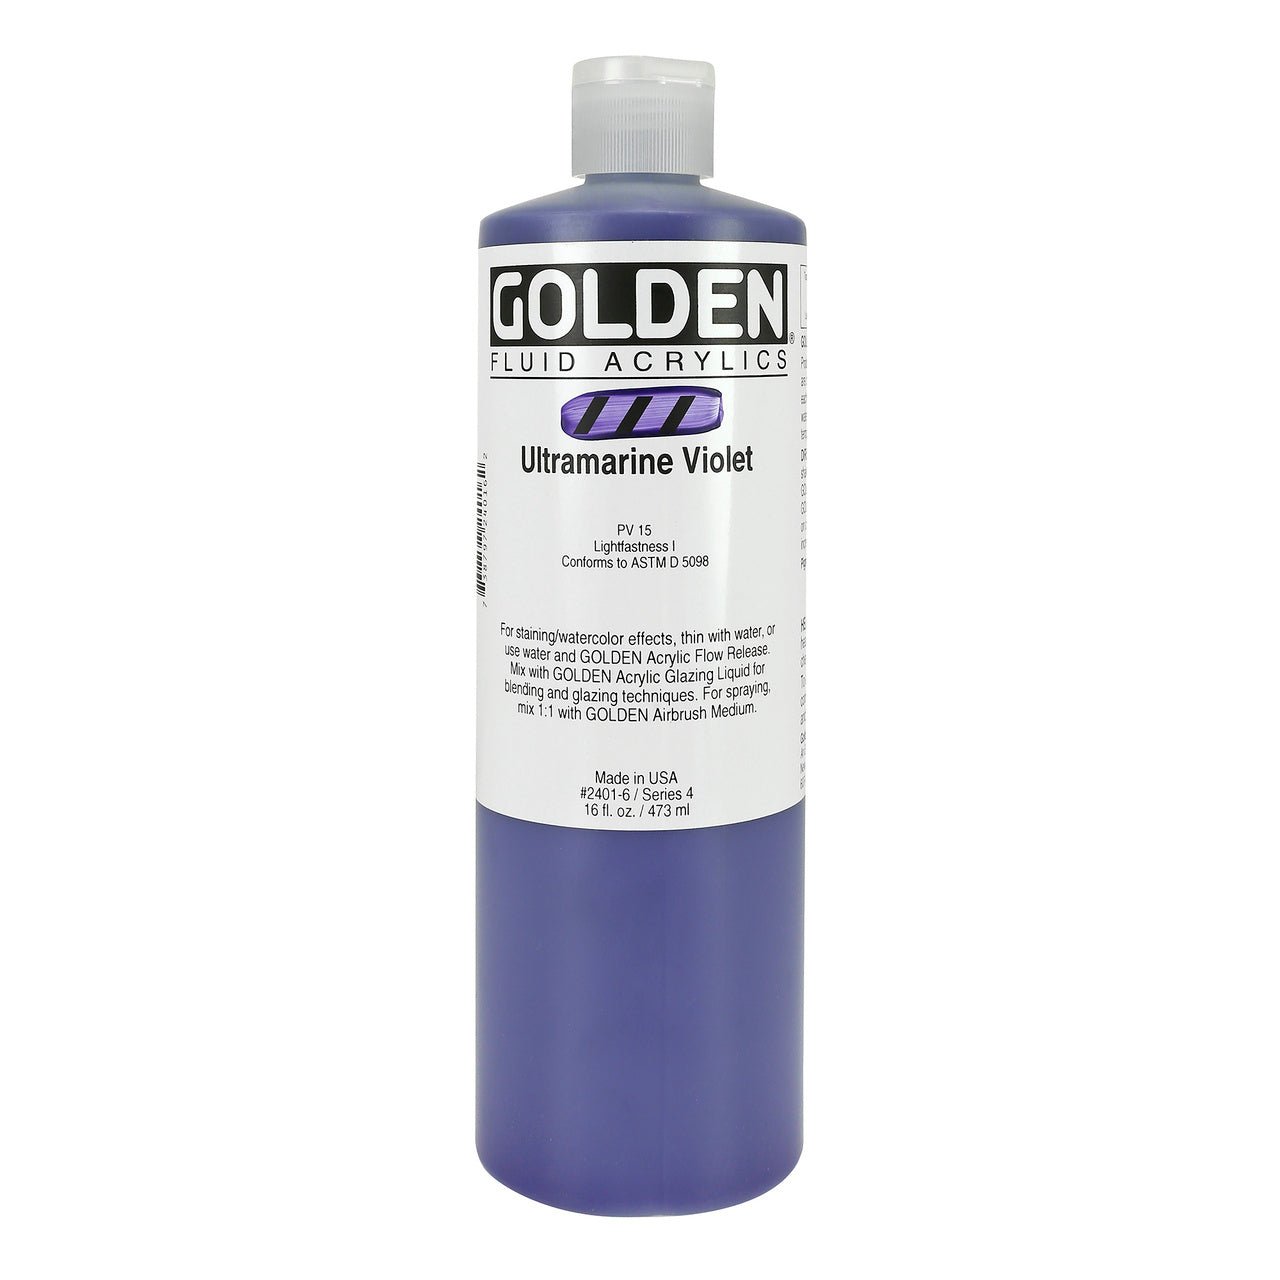 Golden Fluid Acrylic Ultramarine Violet 16 oz - merriartist.com